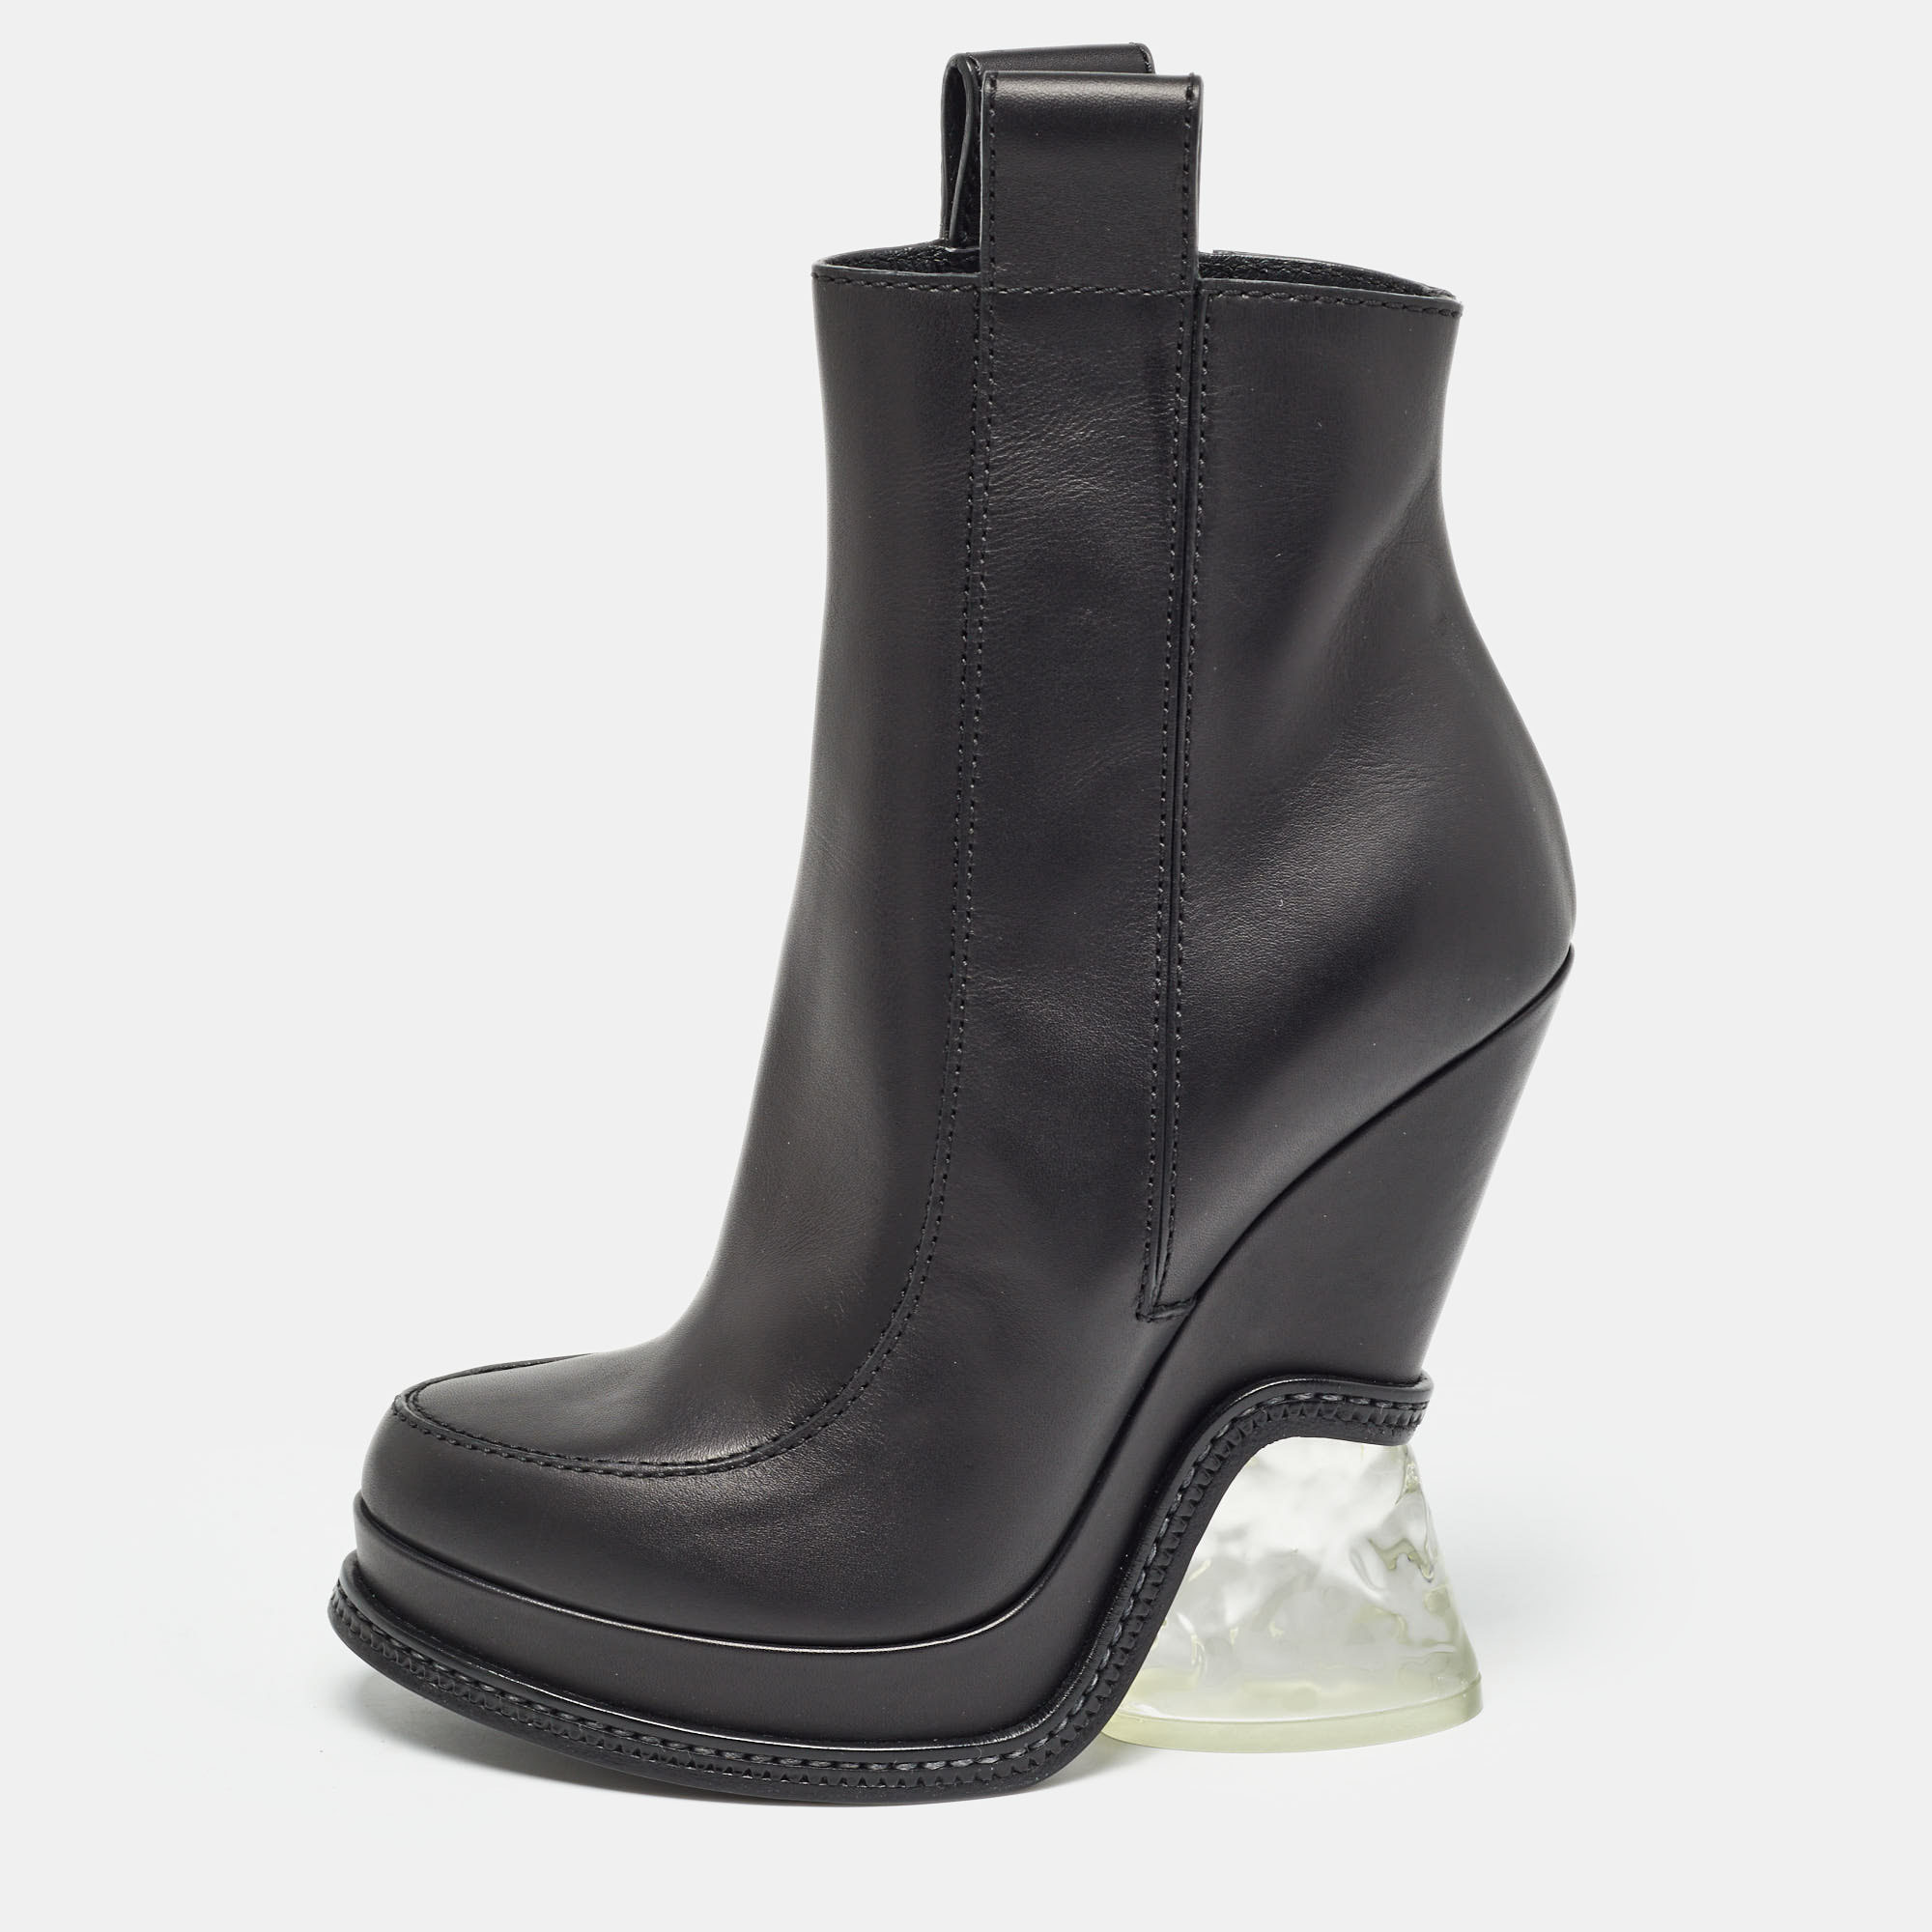 Fendi light black leather ice heel ankle boots size 36